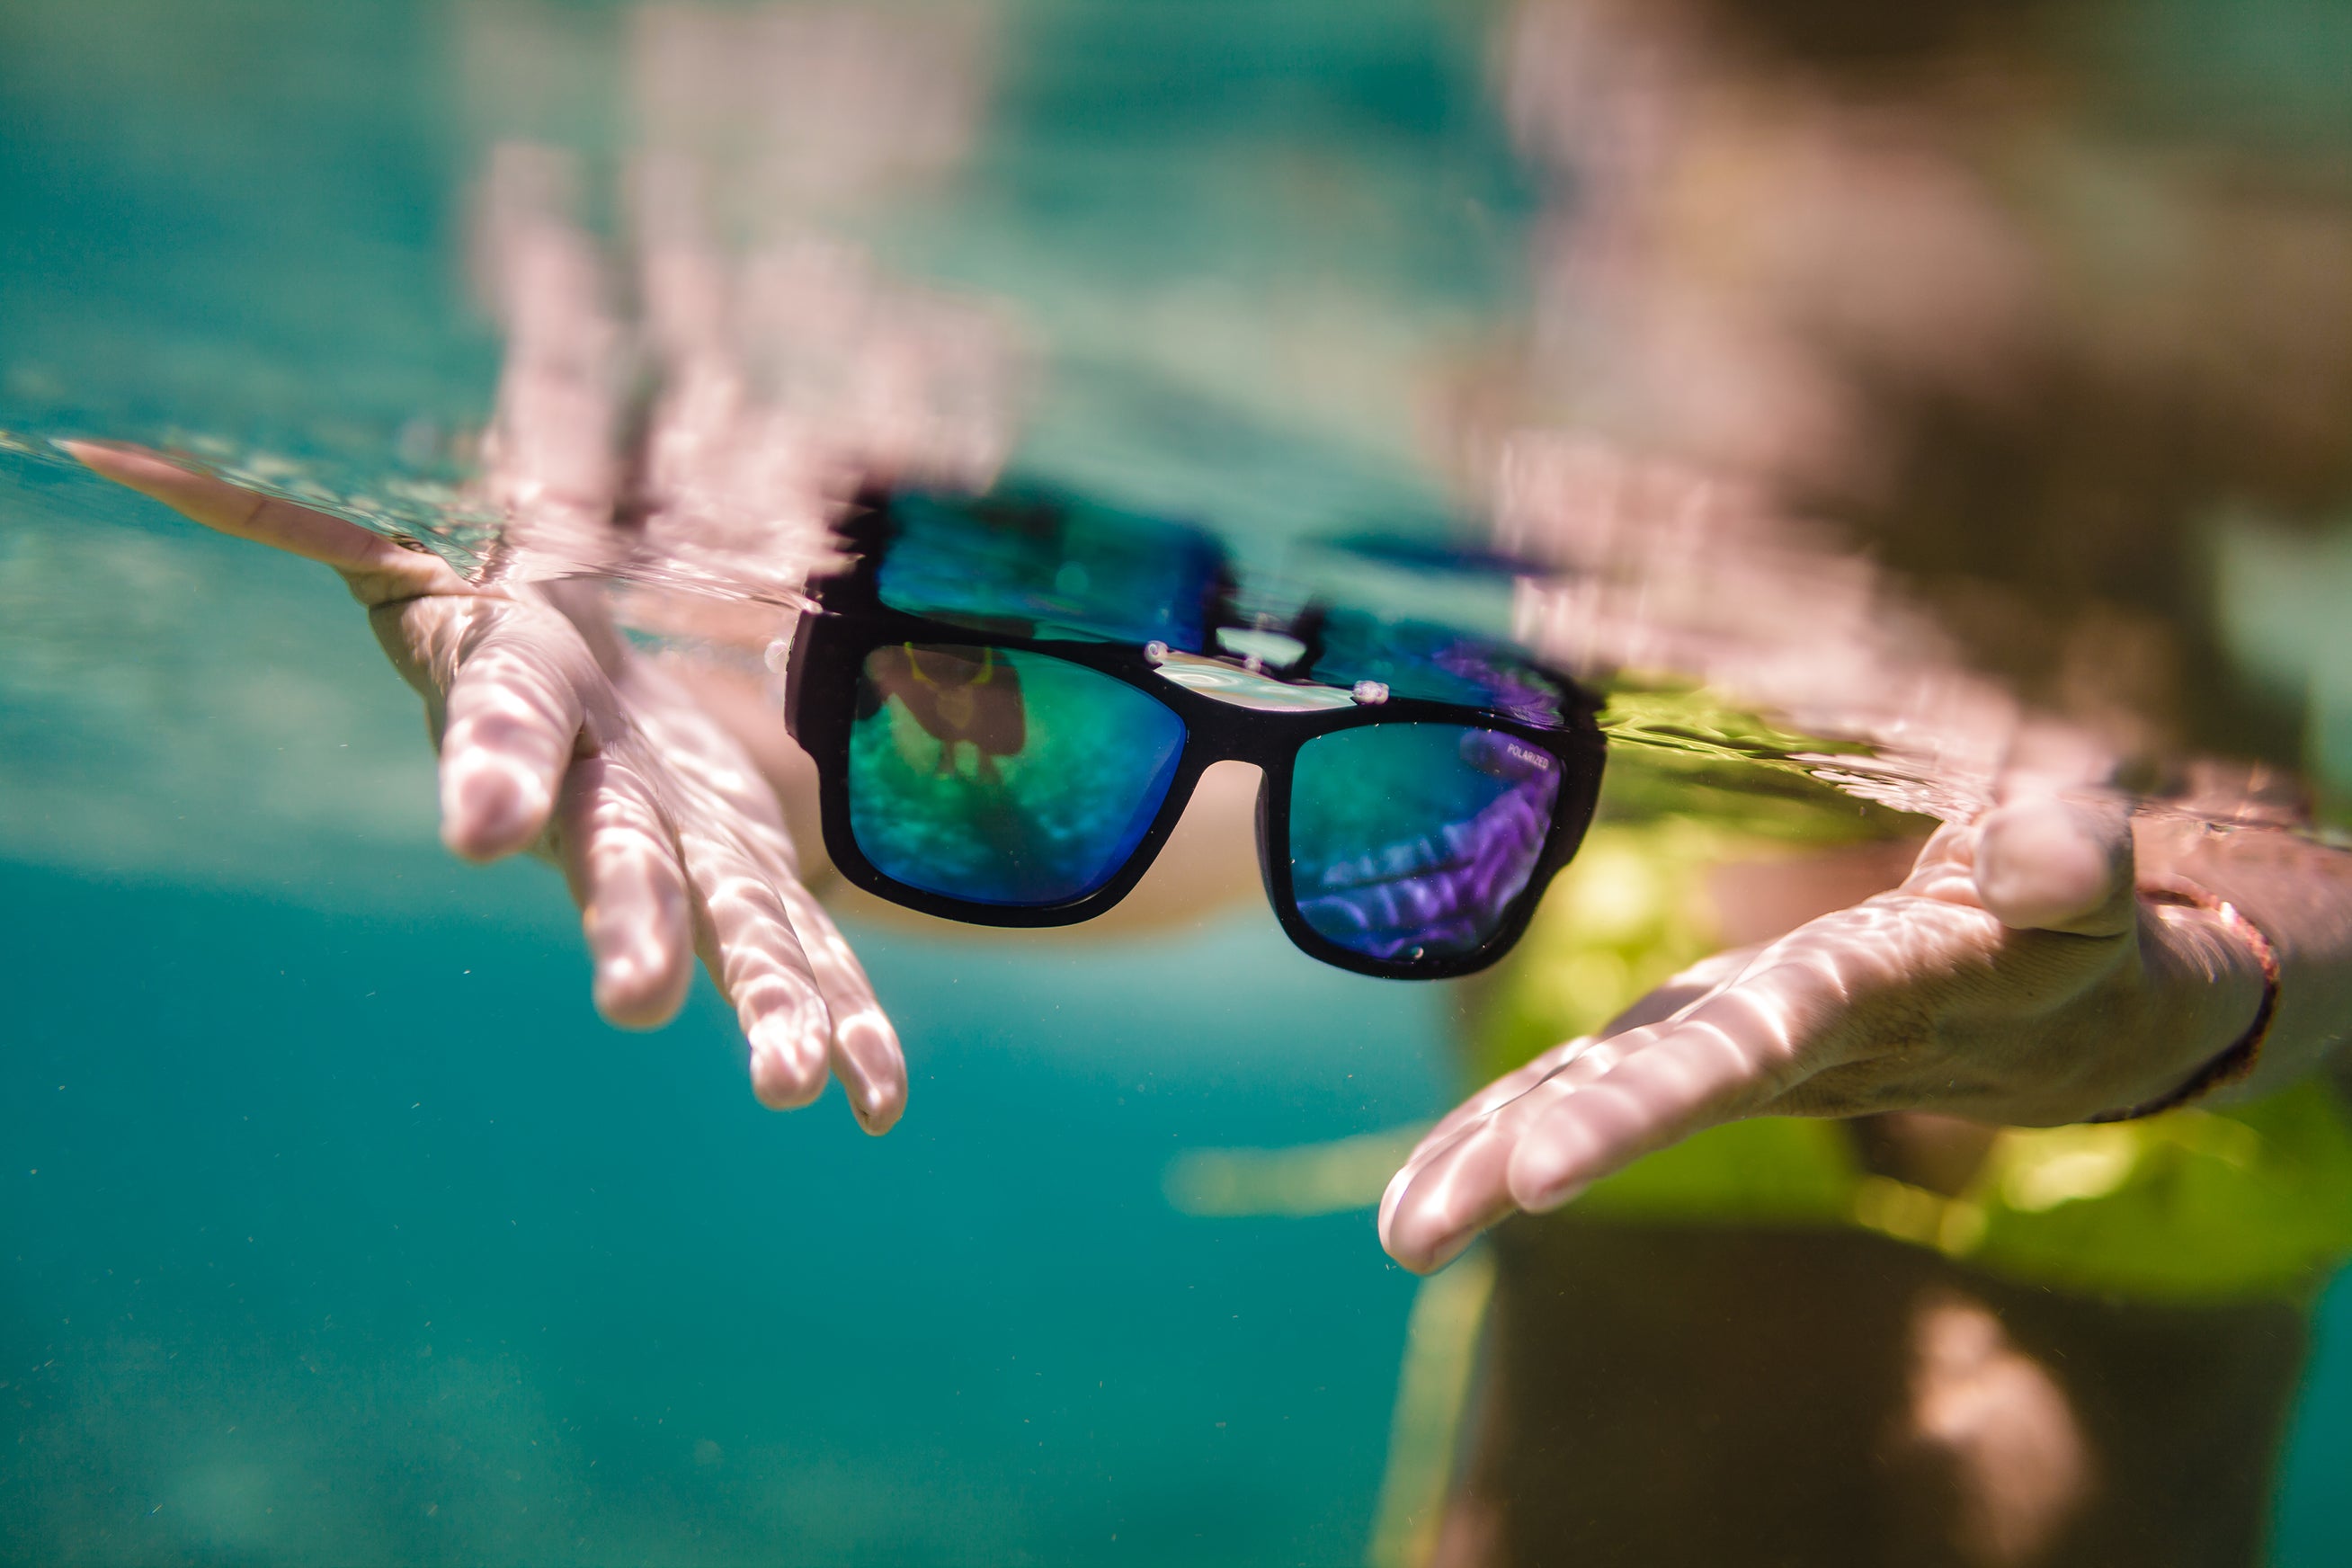 Eliminator + Floatable Polarized - Sunglasses for Men